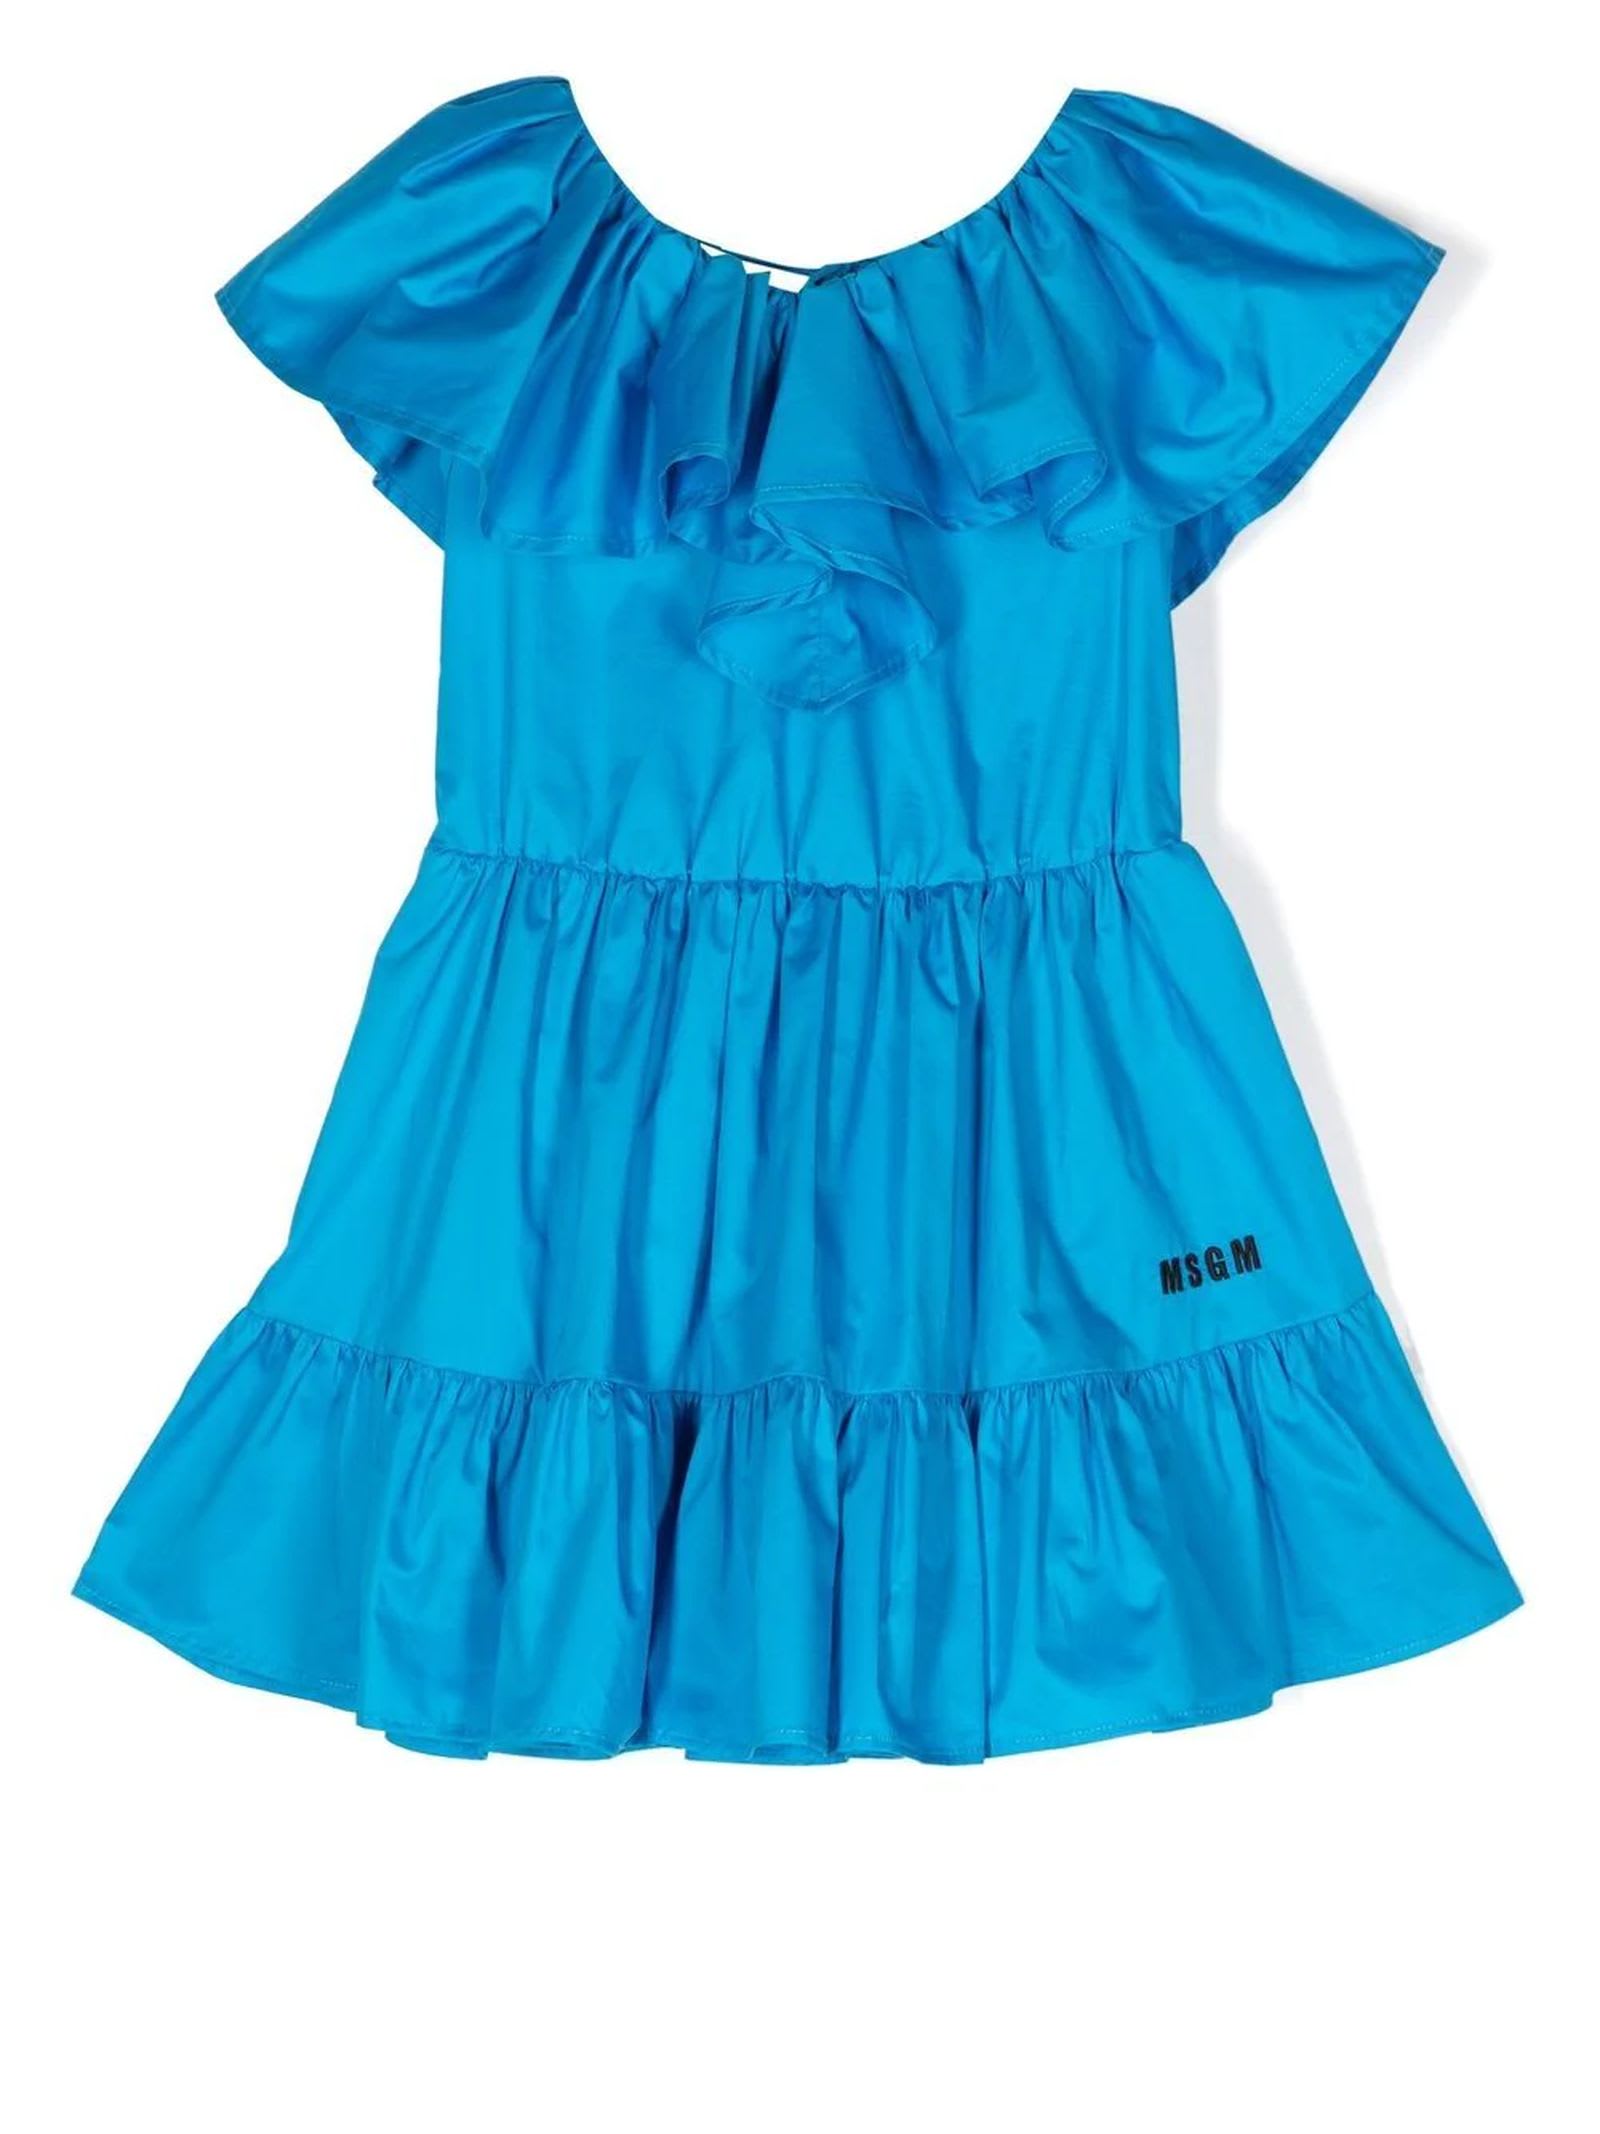 MSGM BLUE COTTON DRESS